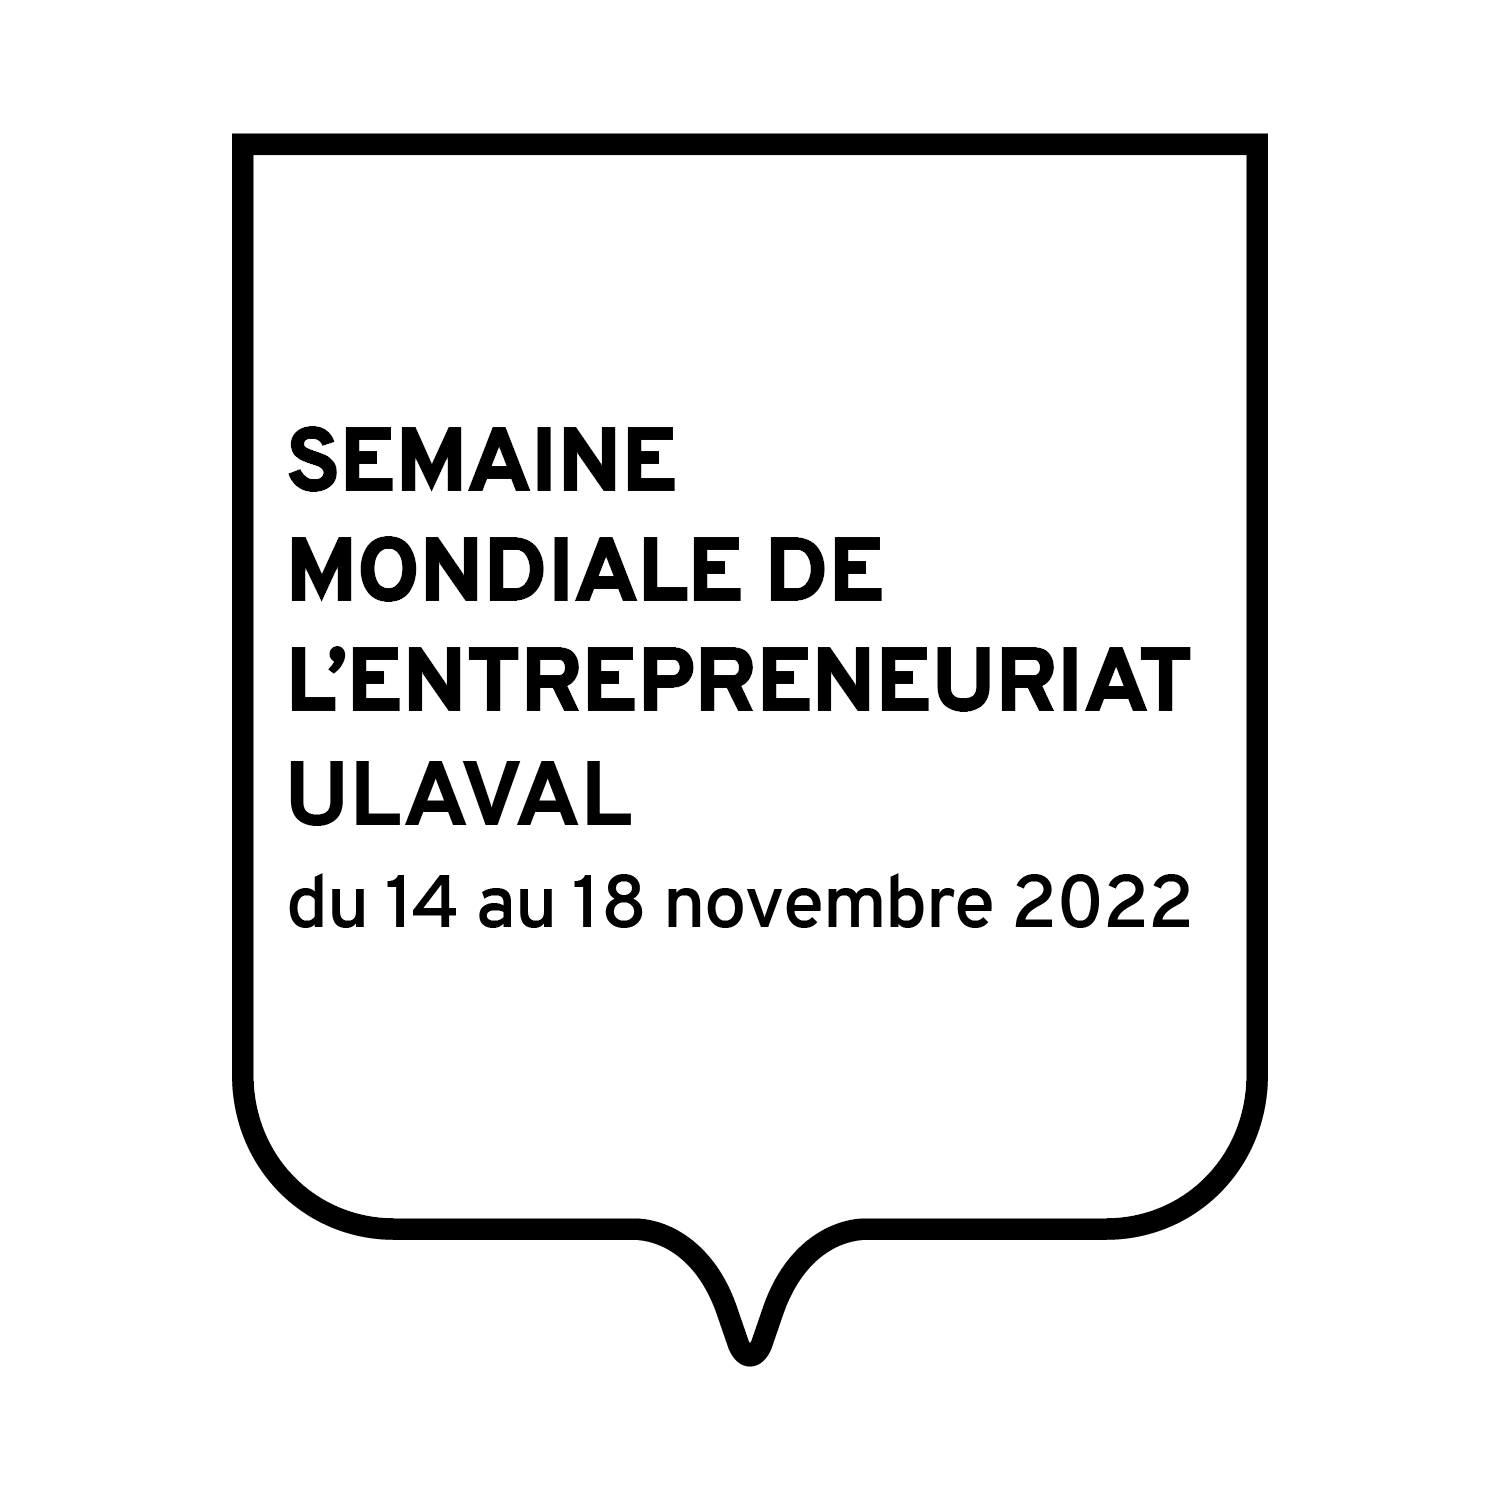 Semaine mondiale de l'entrepreneuriat ULaval 2022